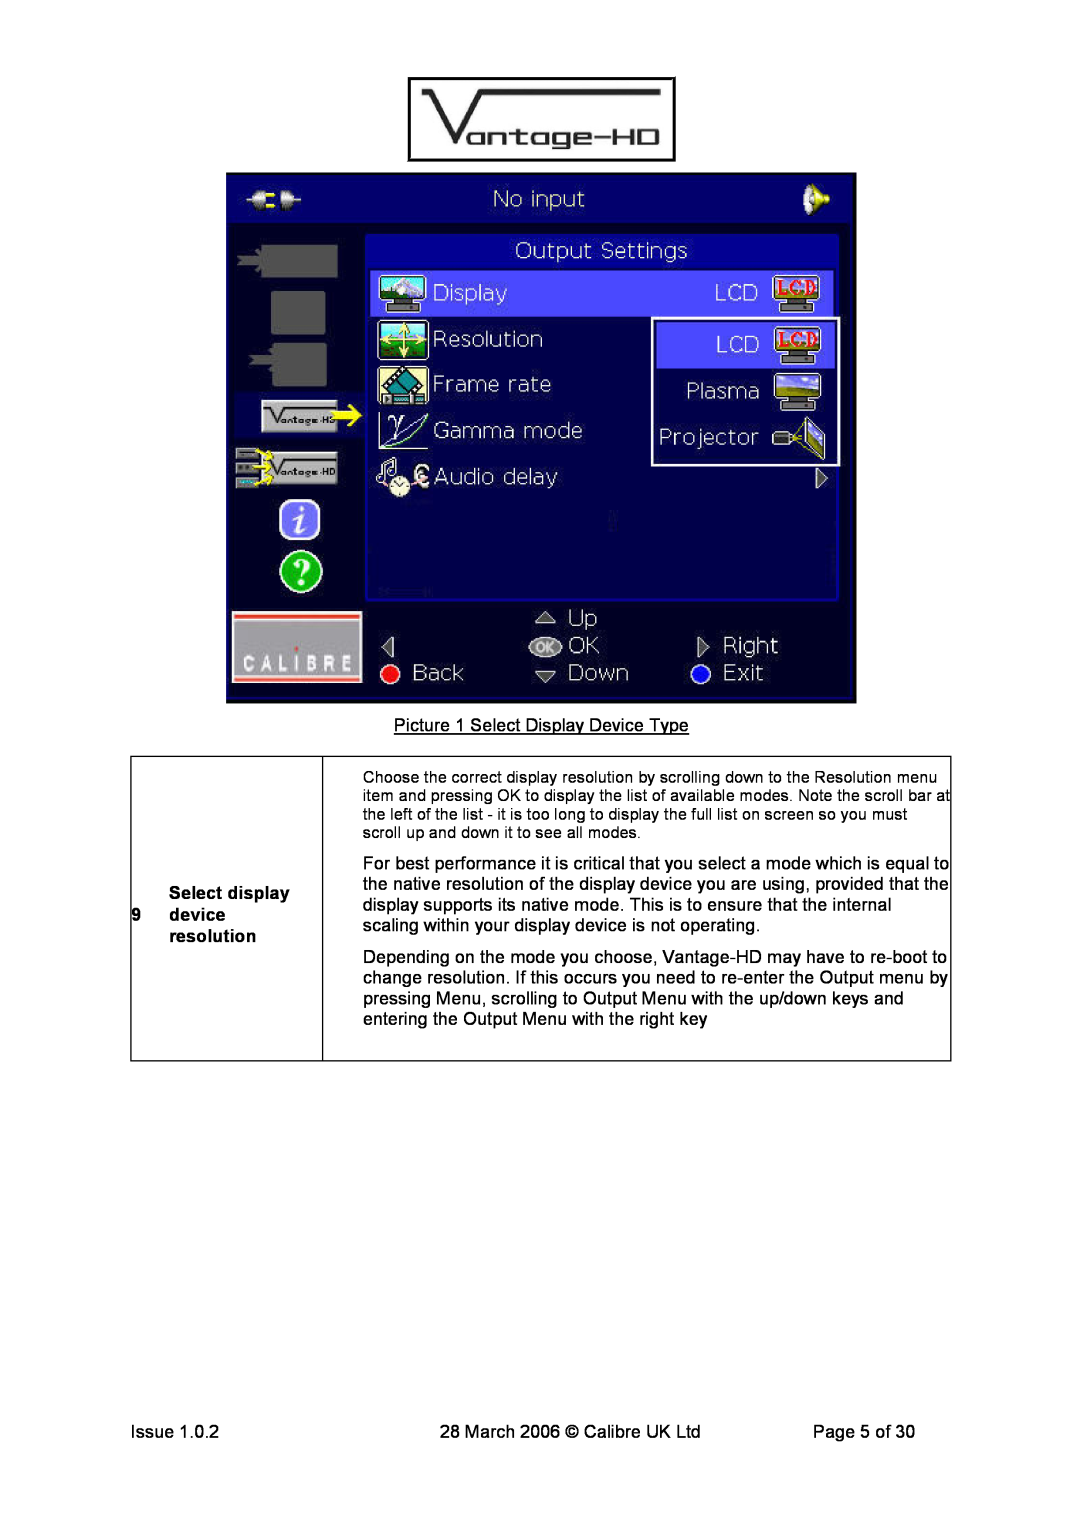 Calibre UK VANTAGE-HD manual Select display 9device resolution 